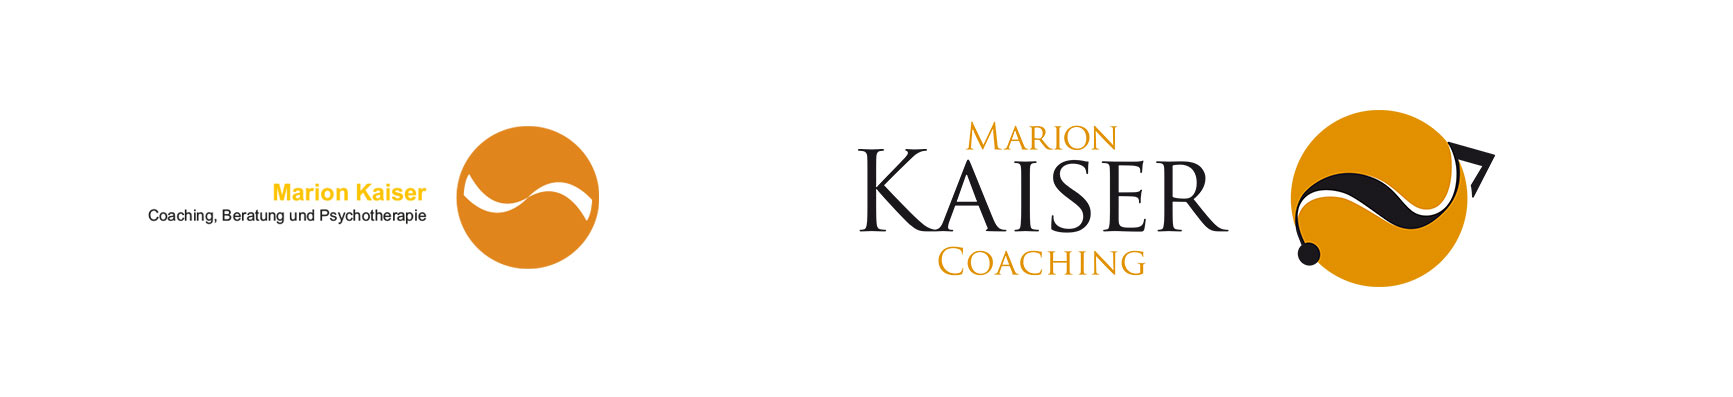 Logo Redesign Marion Kaiser